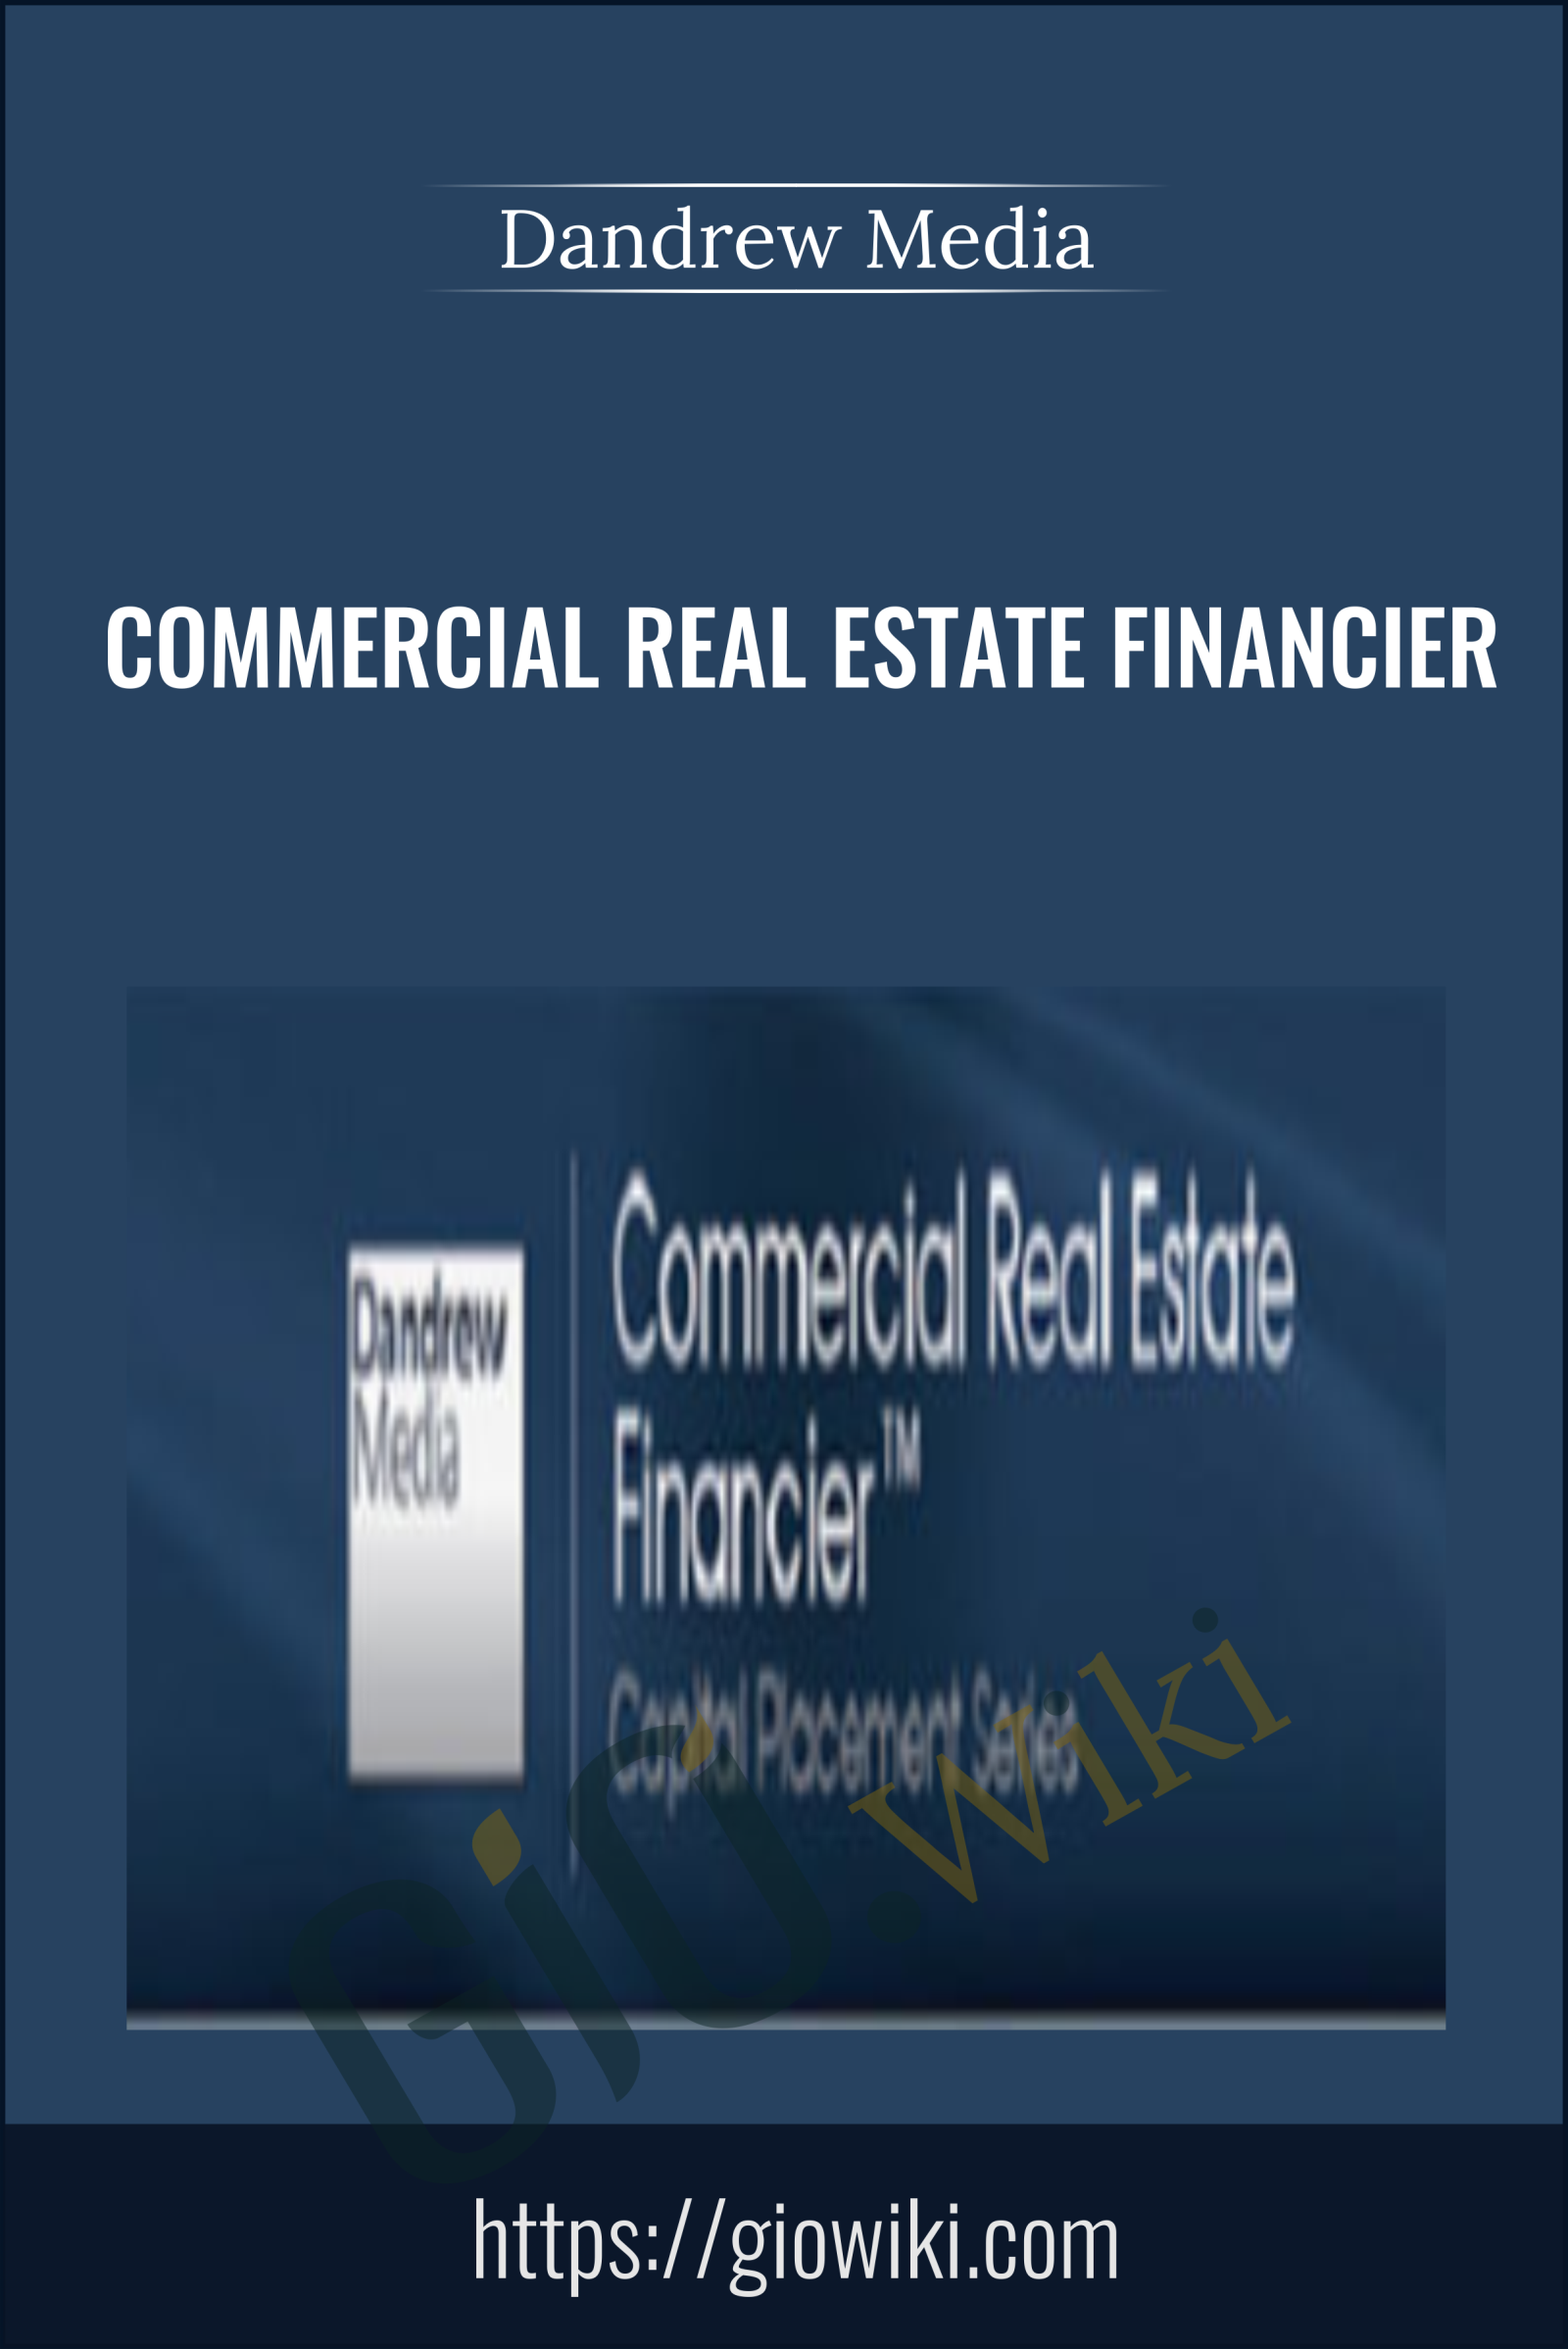 Commercial Real Estate Financier – Dandrew Media